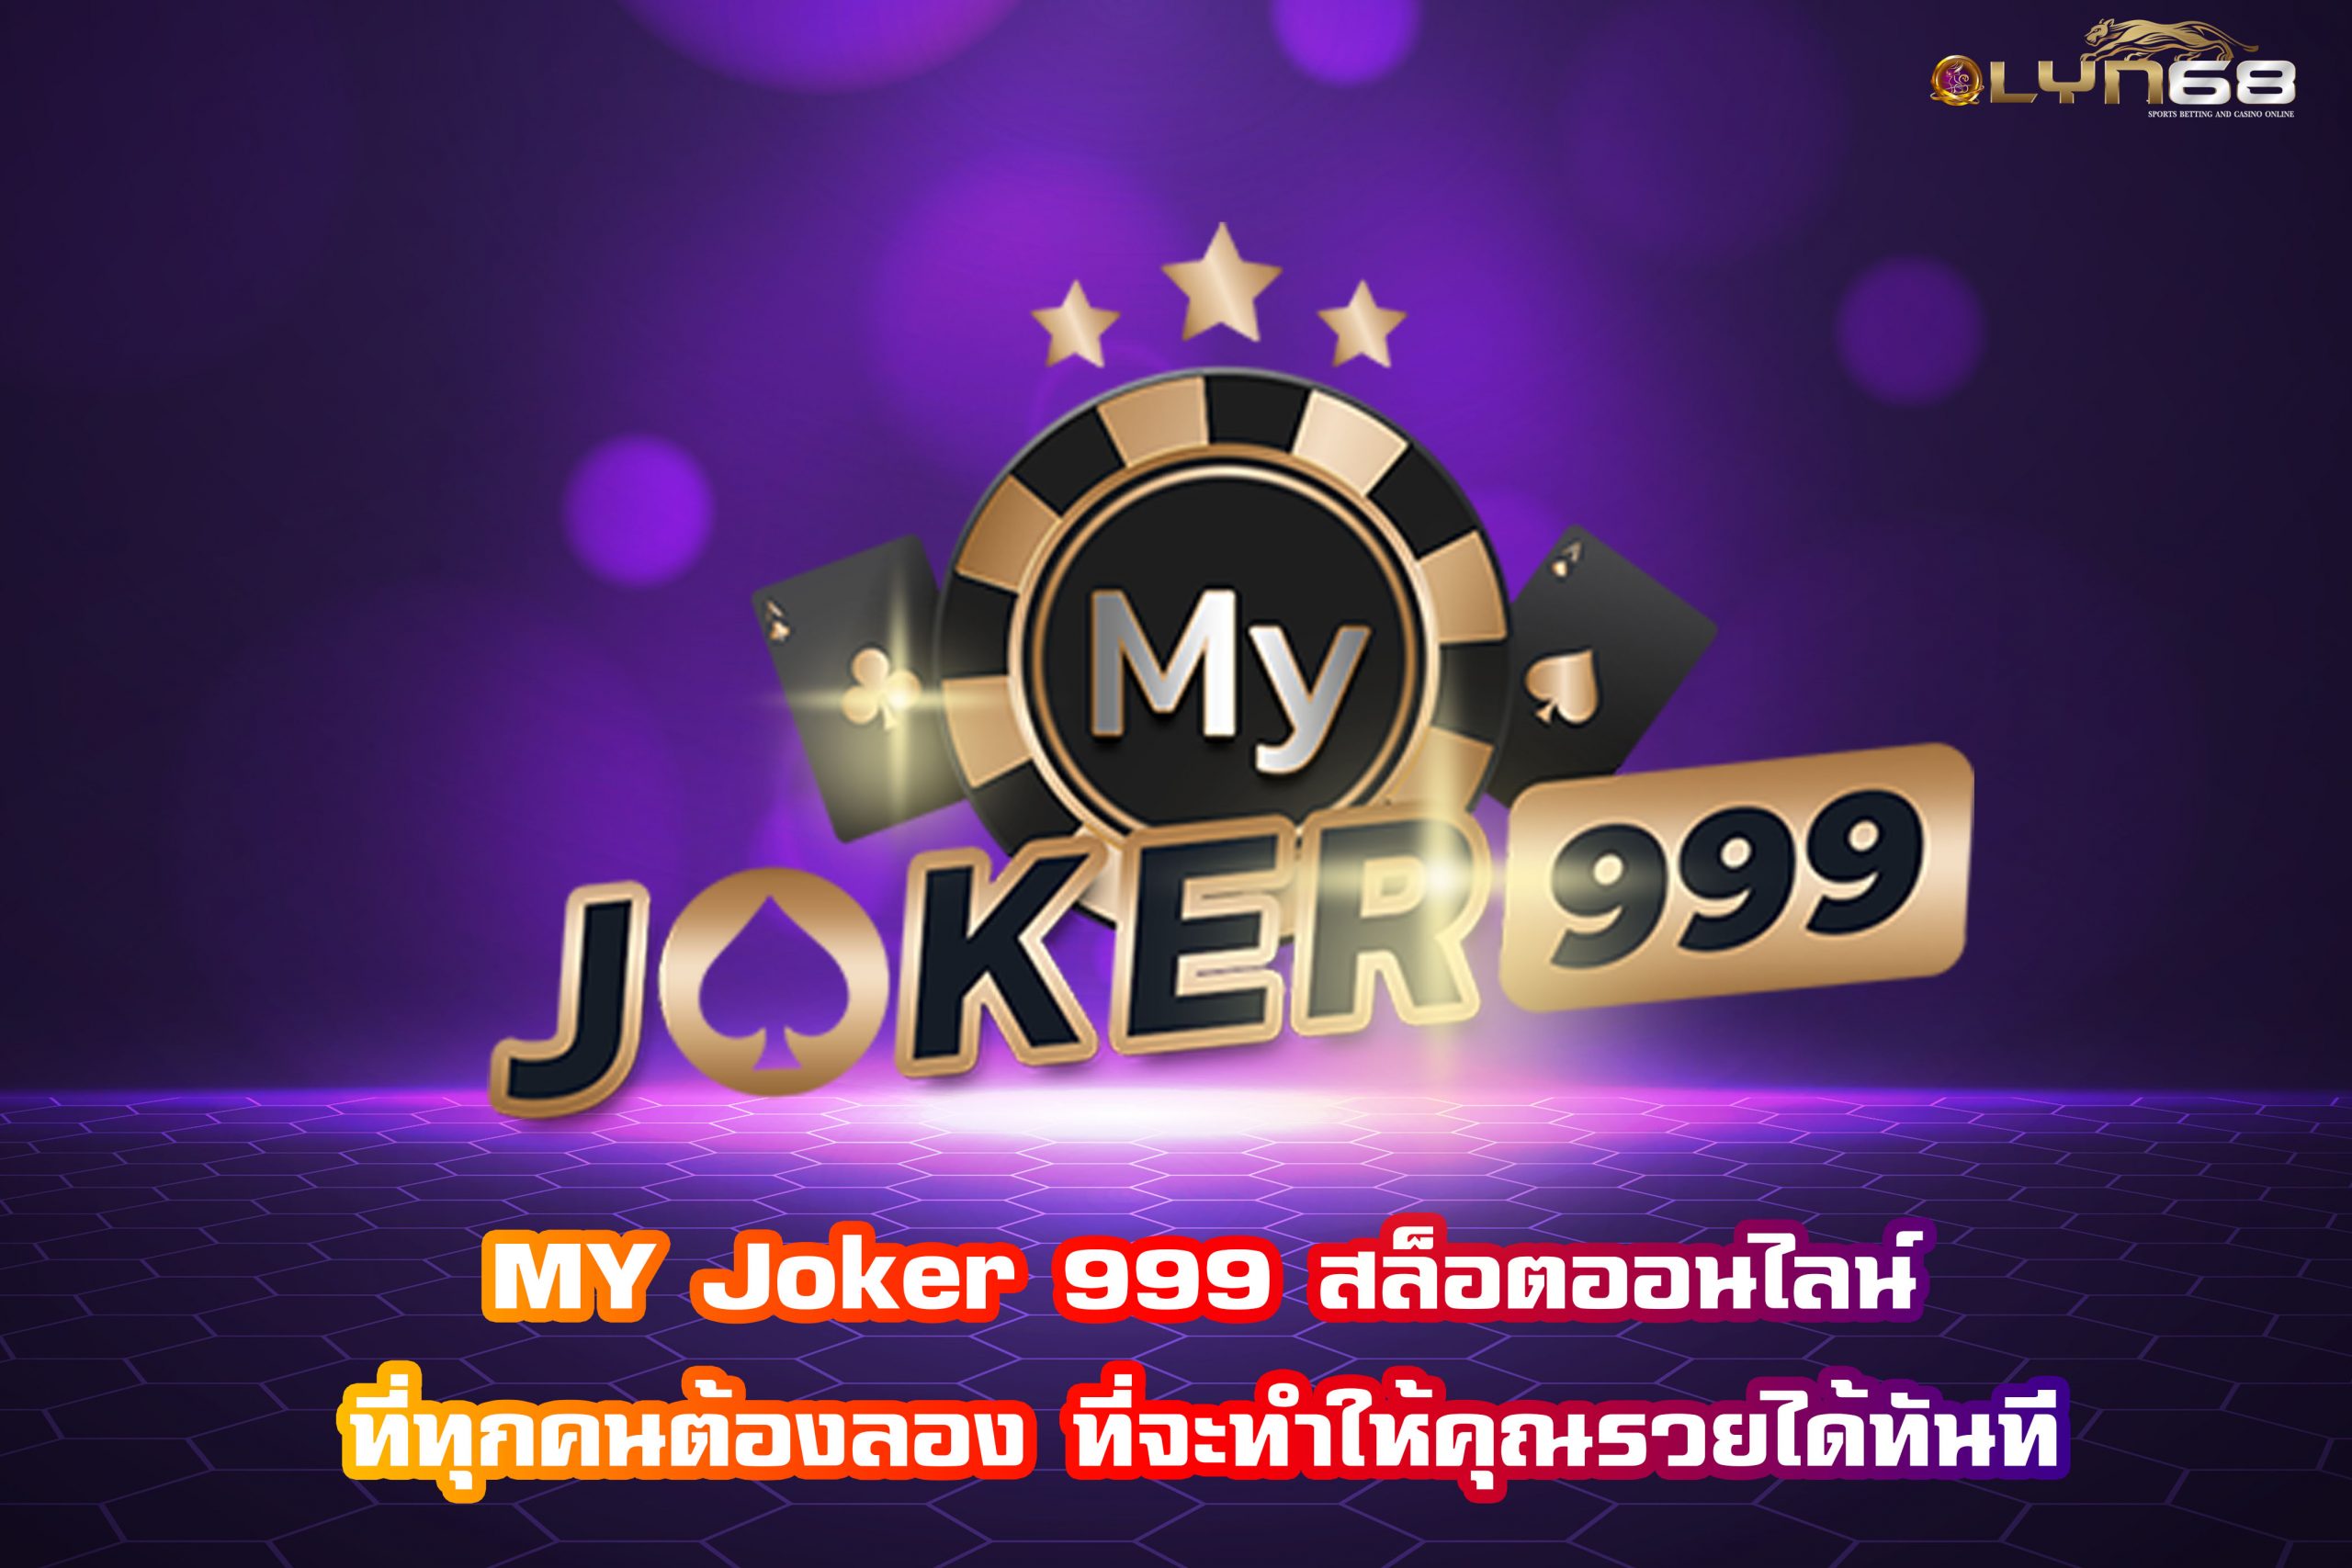 MY Joker 999 สล็อตออนไลน์ที่ทุกคนต้องลอง ที่จะทำให้คุณรวยได้ทันที